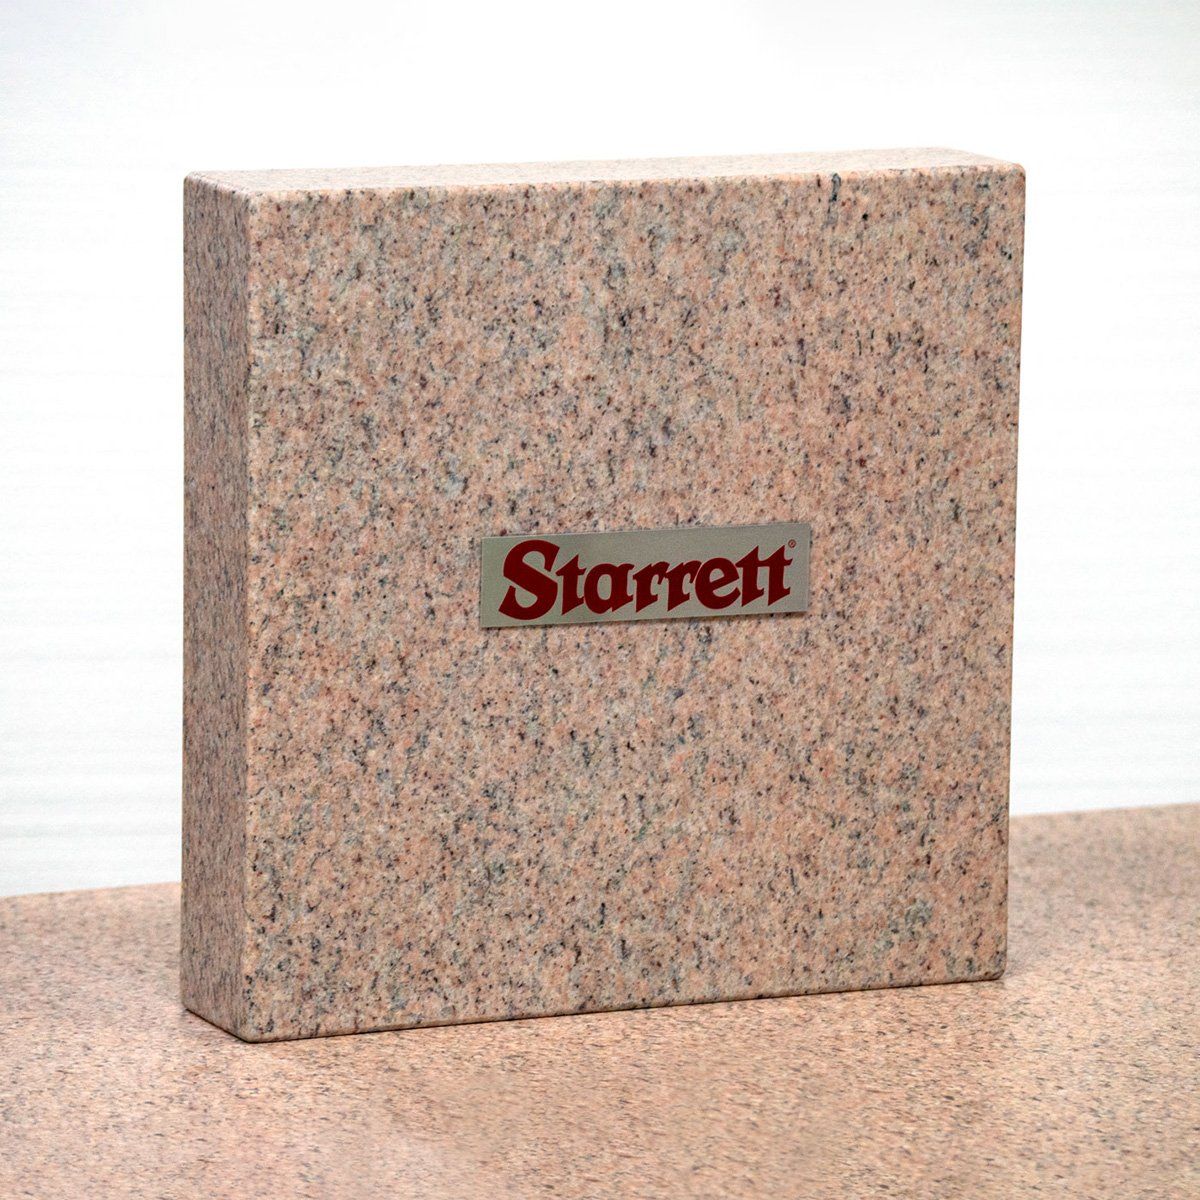 Pink granite master square with Starrett logo